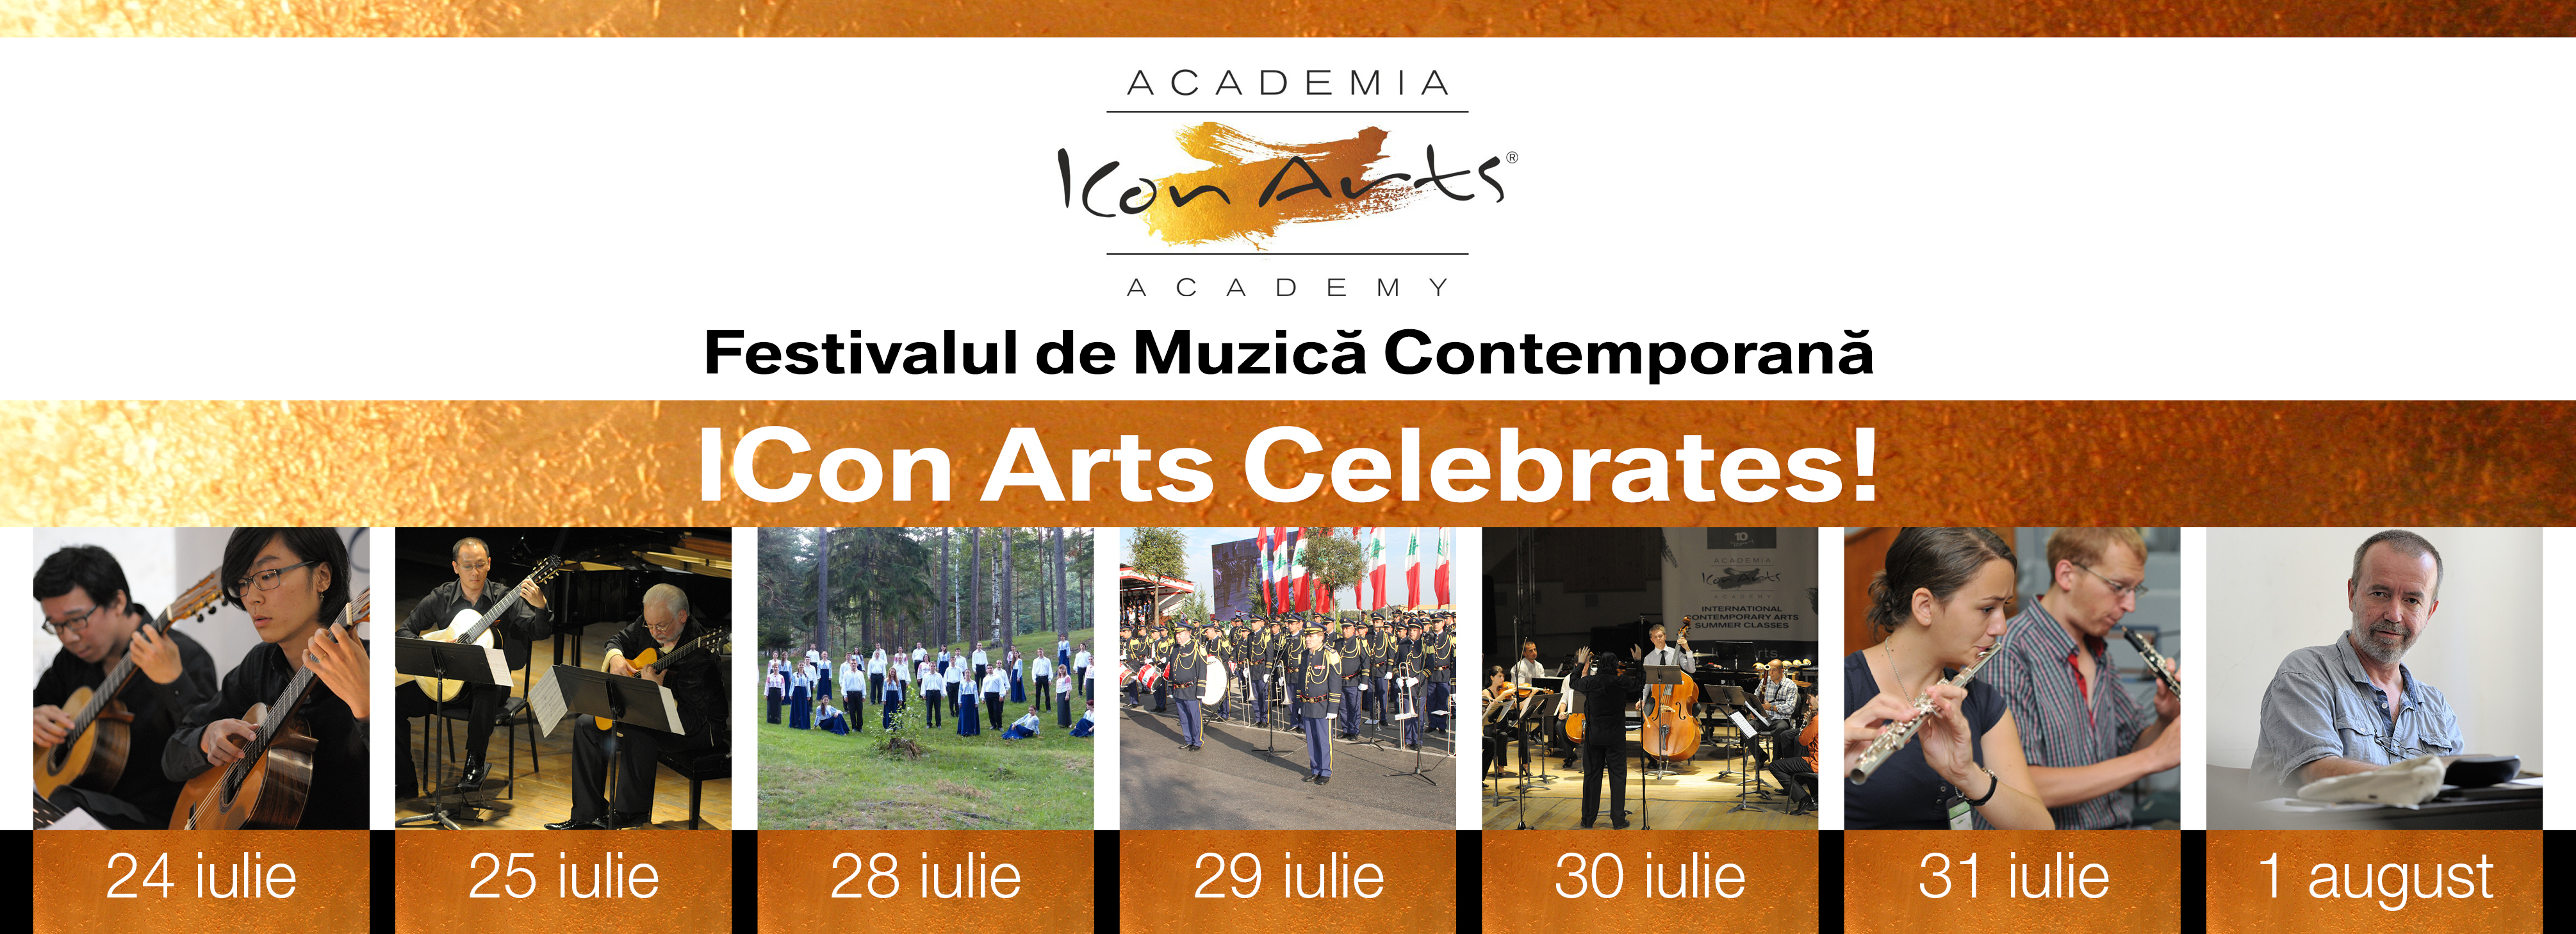 ICon Arts Celebrates 2014